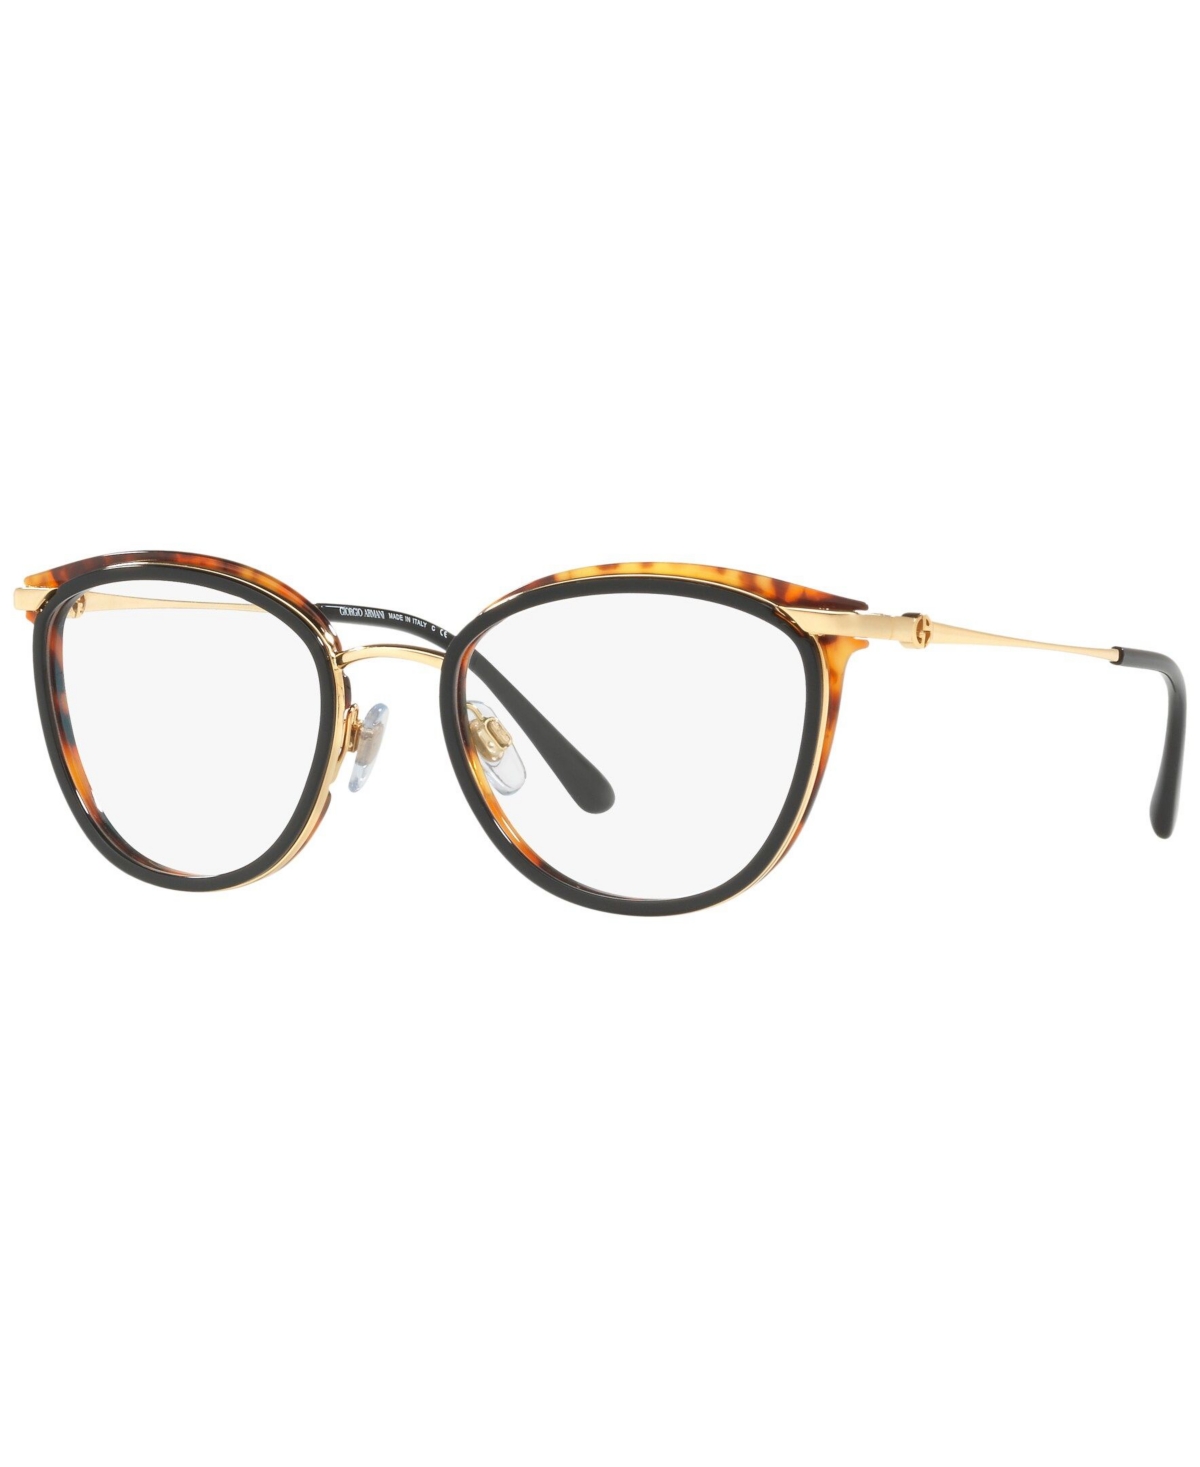 AR5074 Women's Phantos Eyeglasses - Blck Yellw